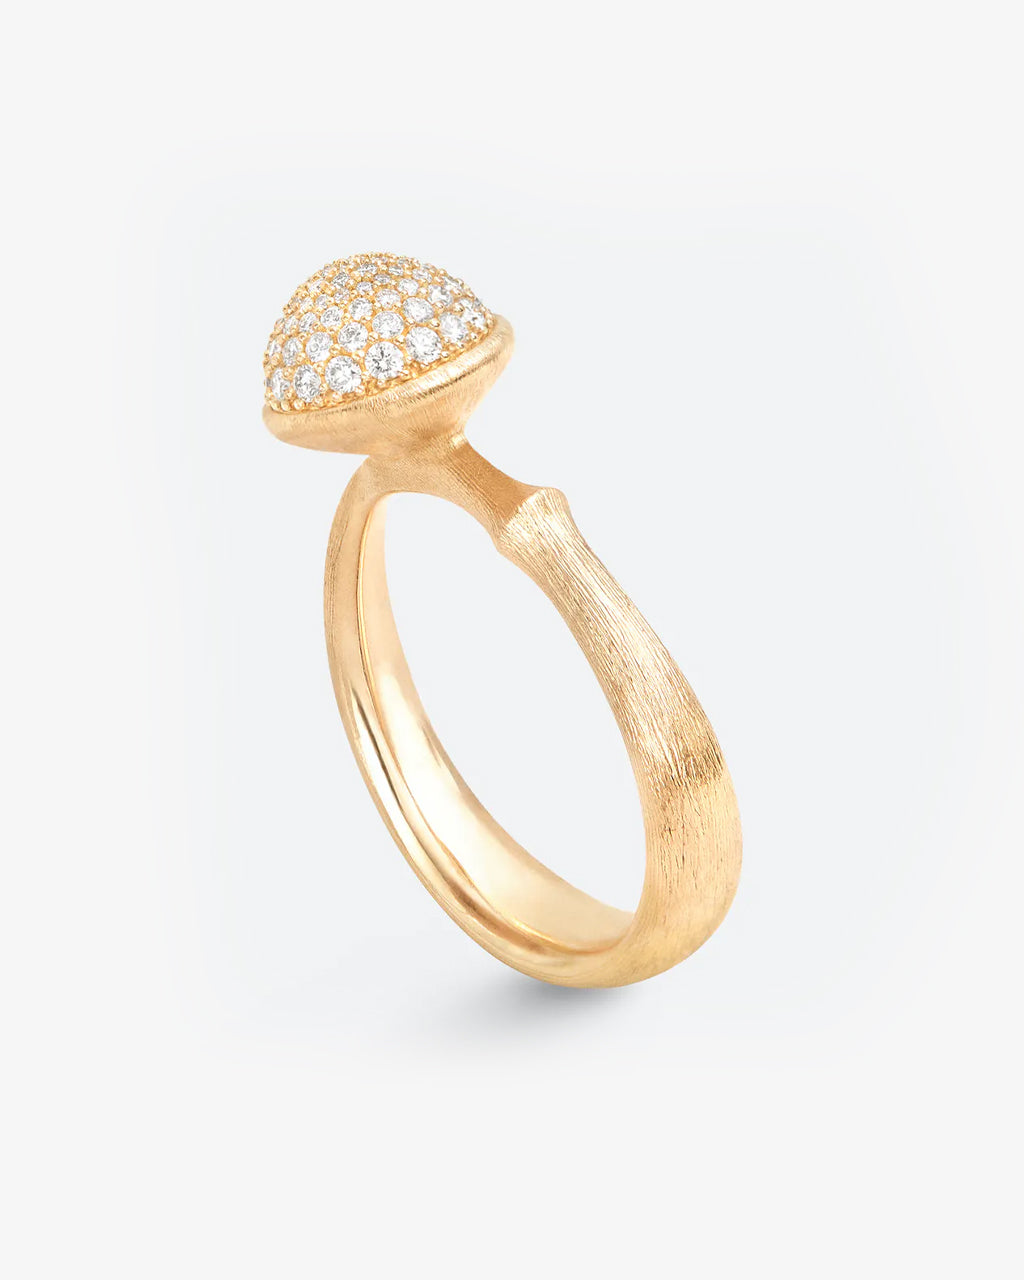 Ole Lynggaard 'Lotus' Diamond Ring